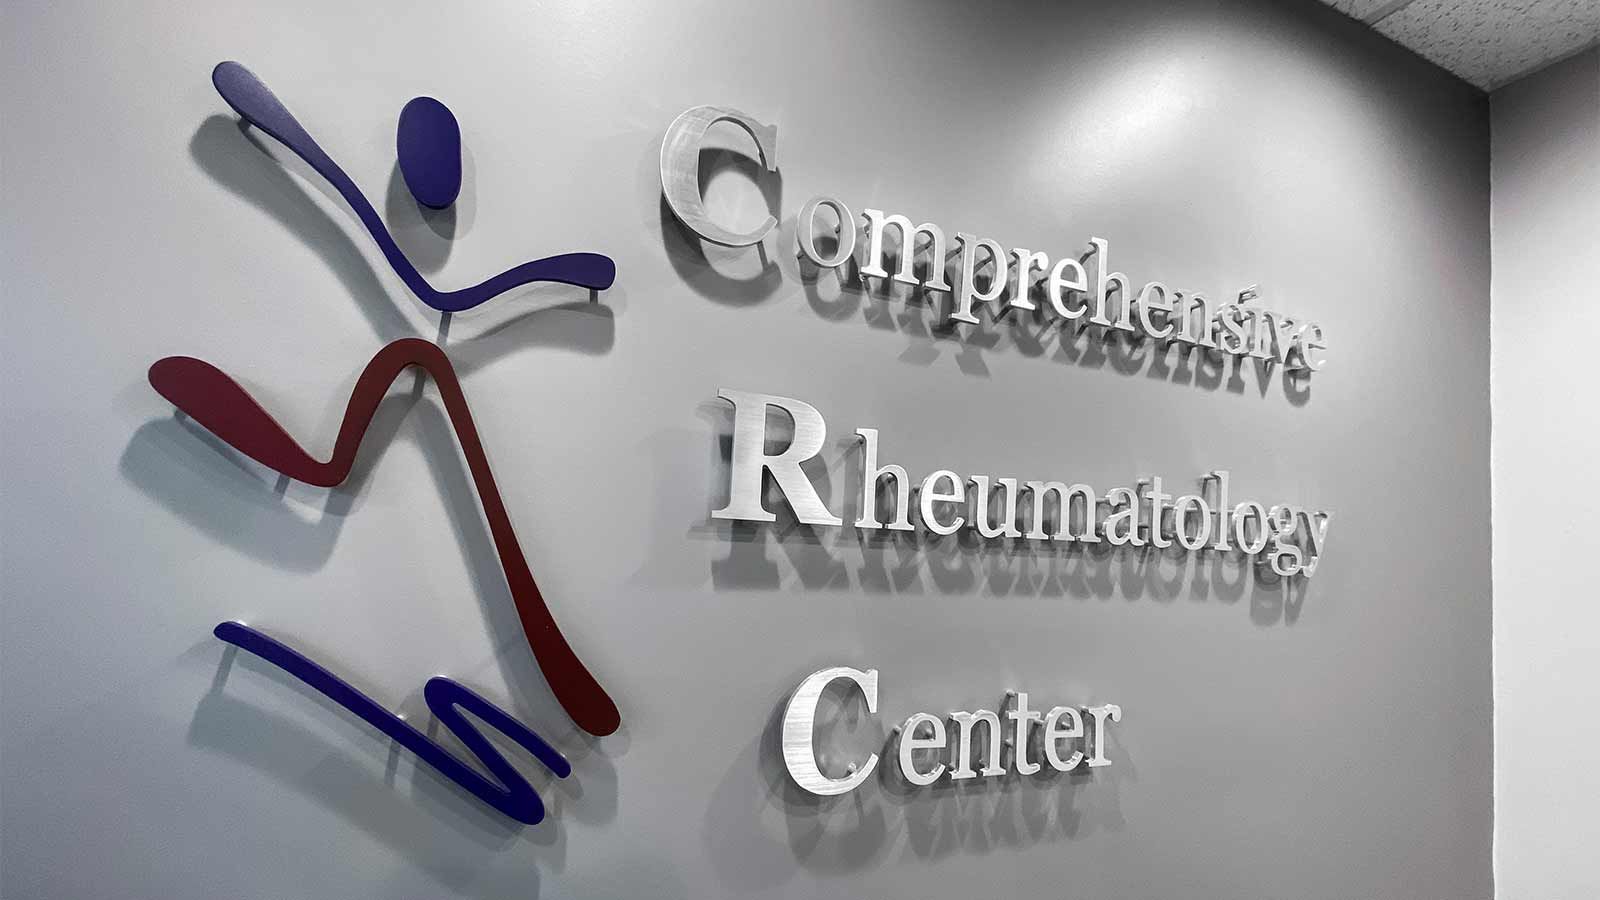 comprehensive rheumatology center pin mounted sign